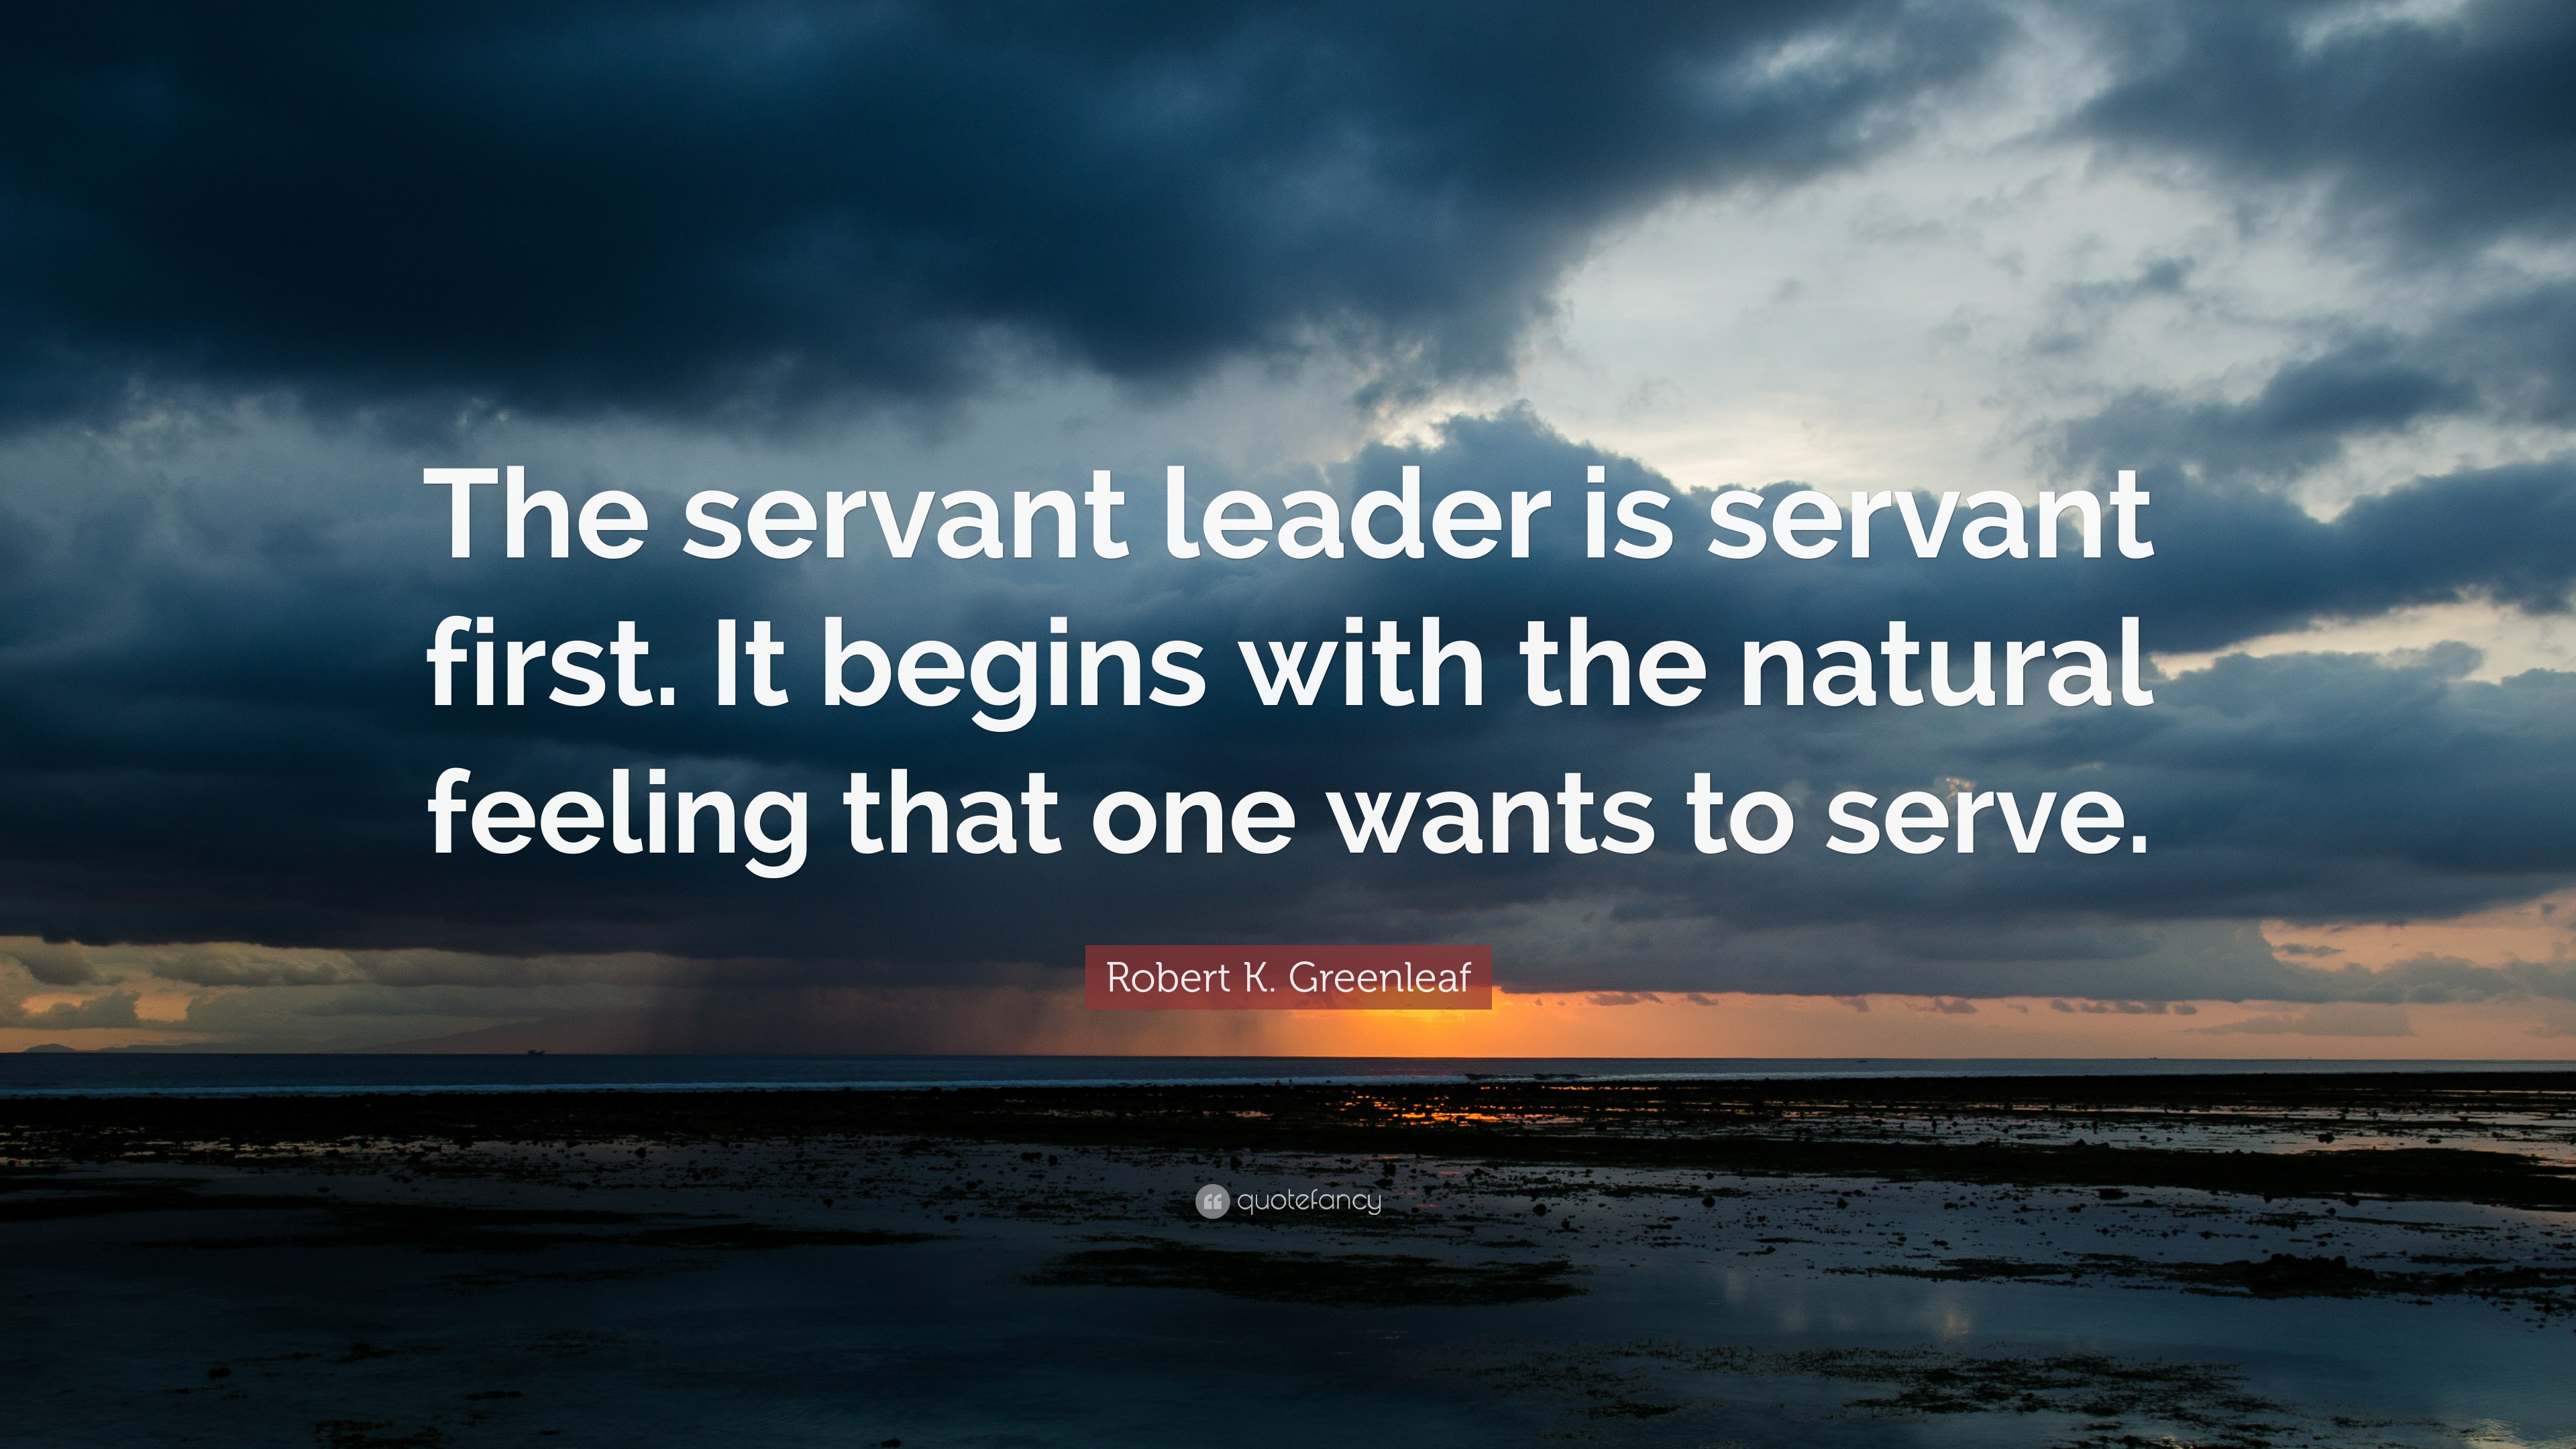 Robert K. Greenleaf Quote: “The servant leader is servant first. It